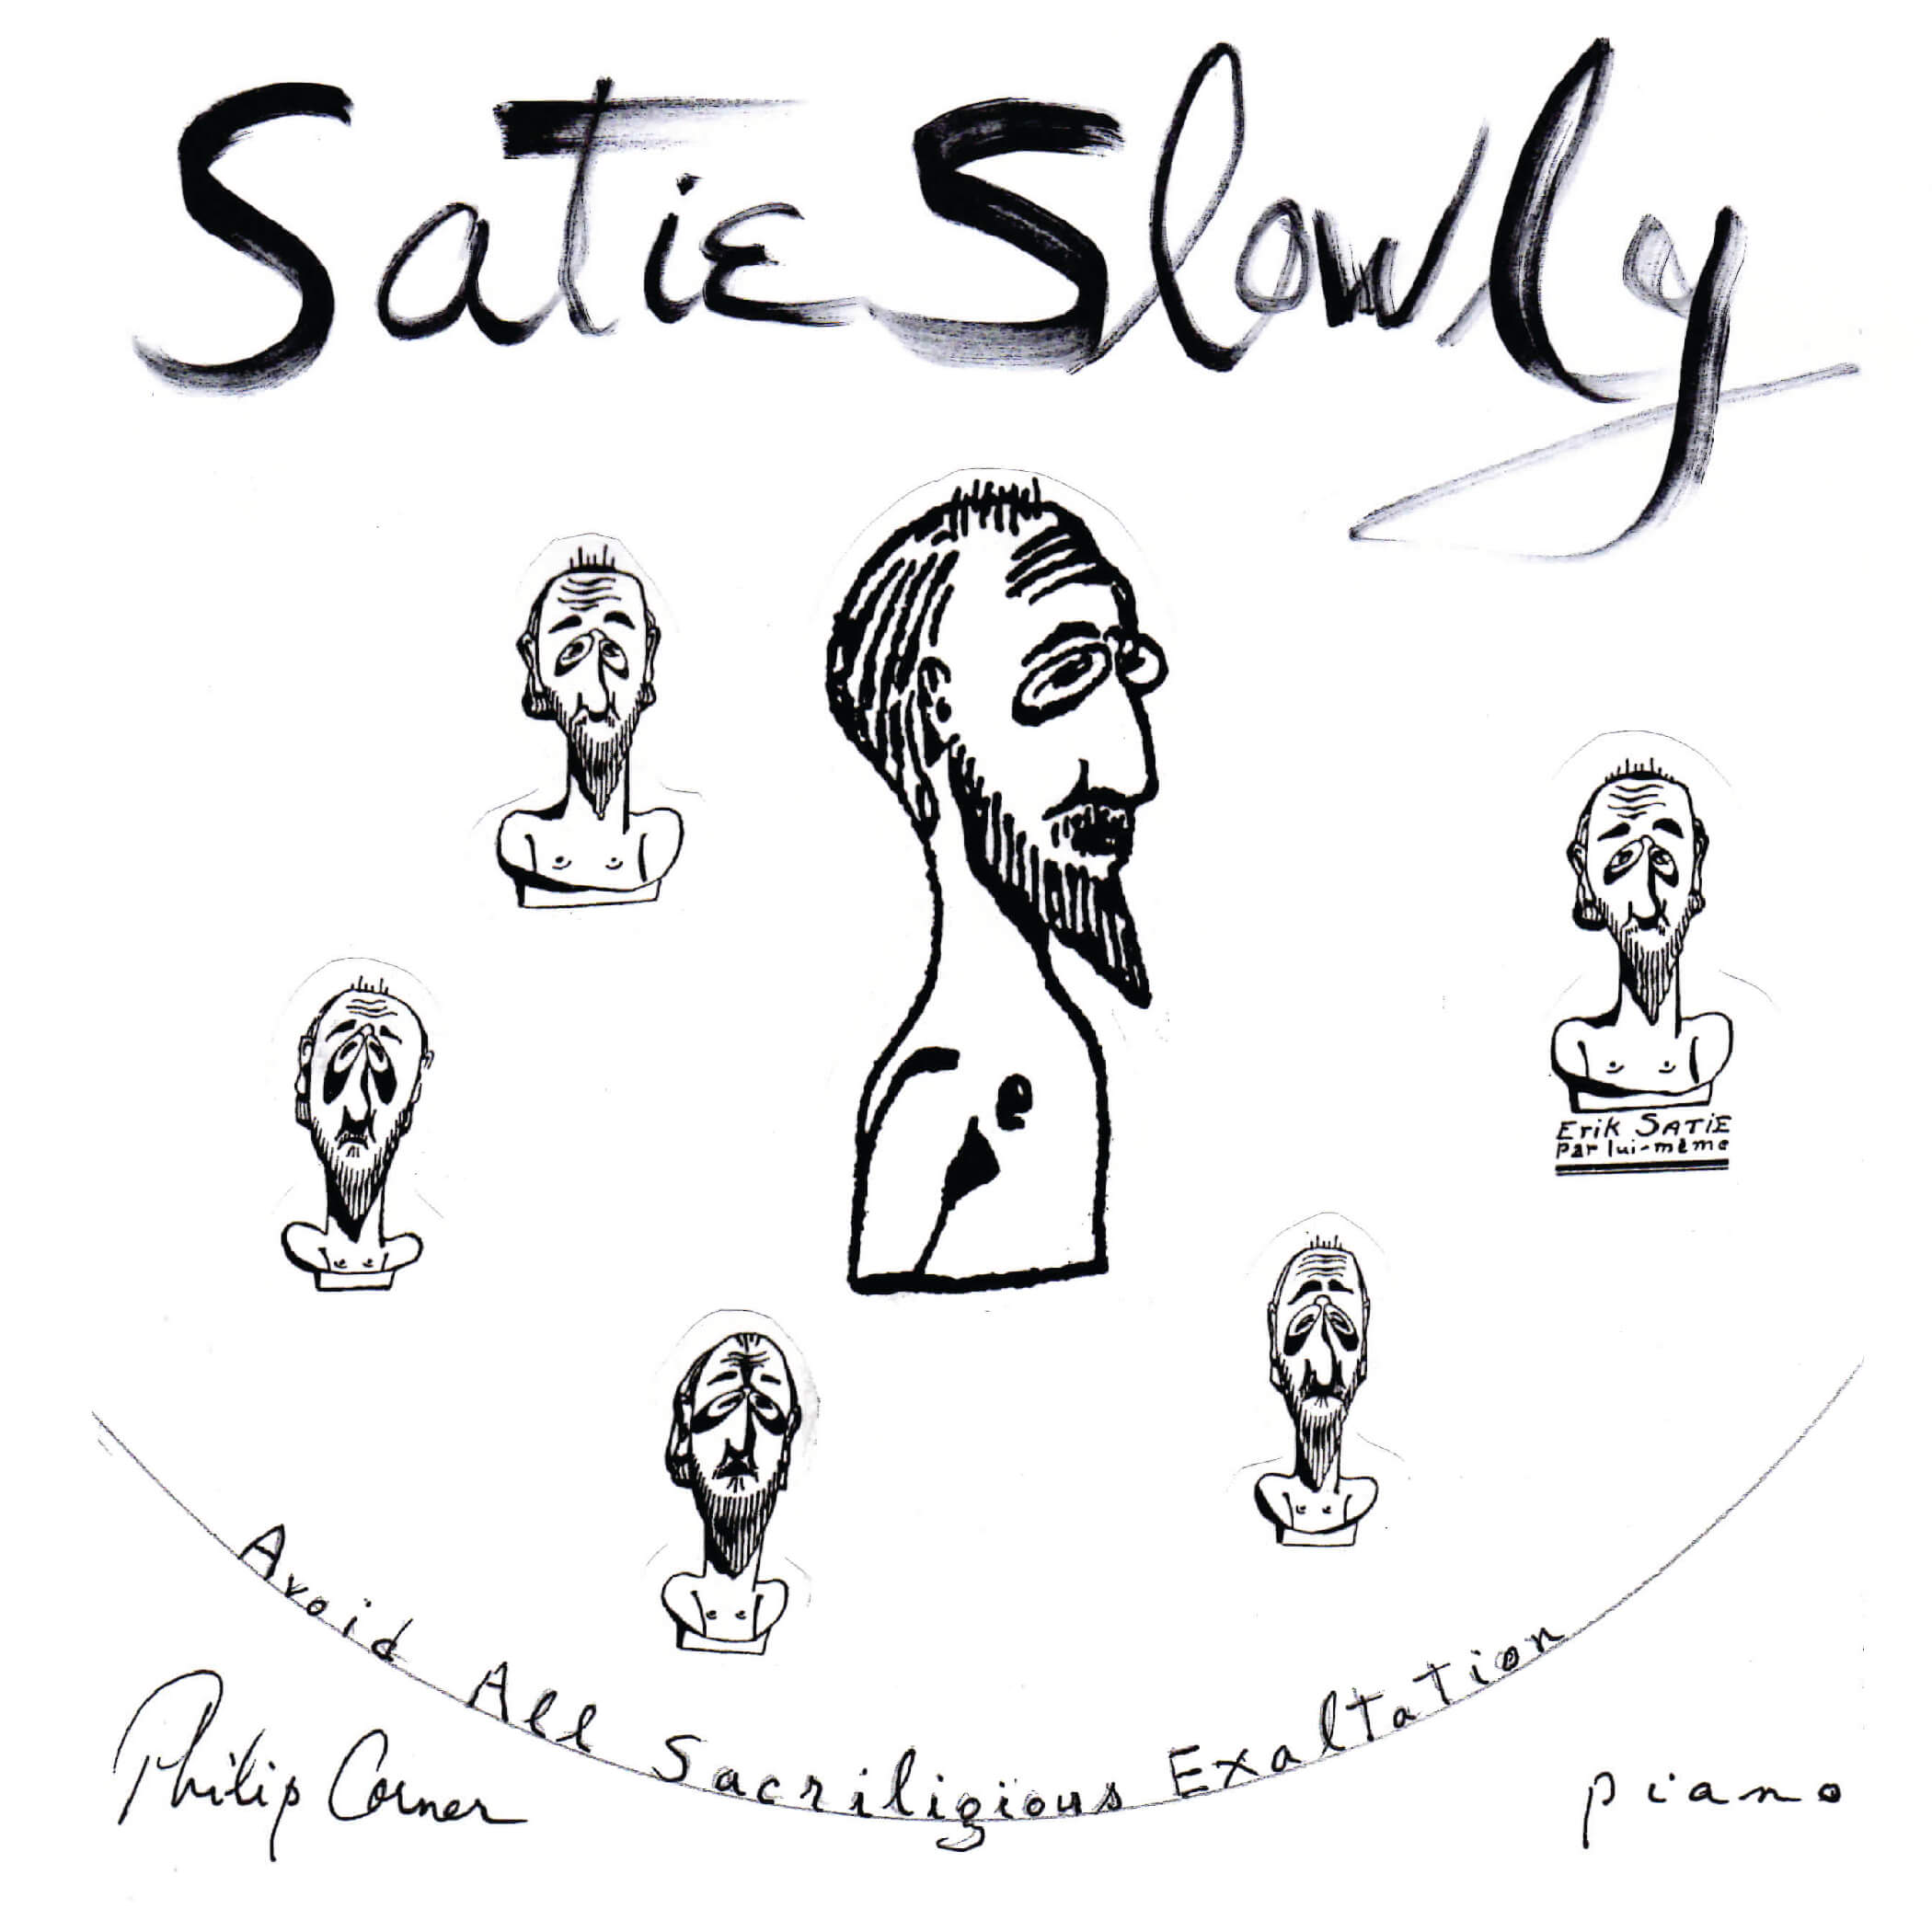 Satie Slowly by Philip Corner